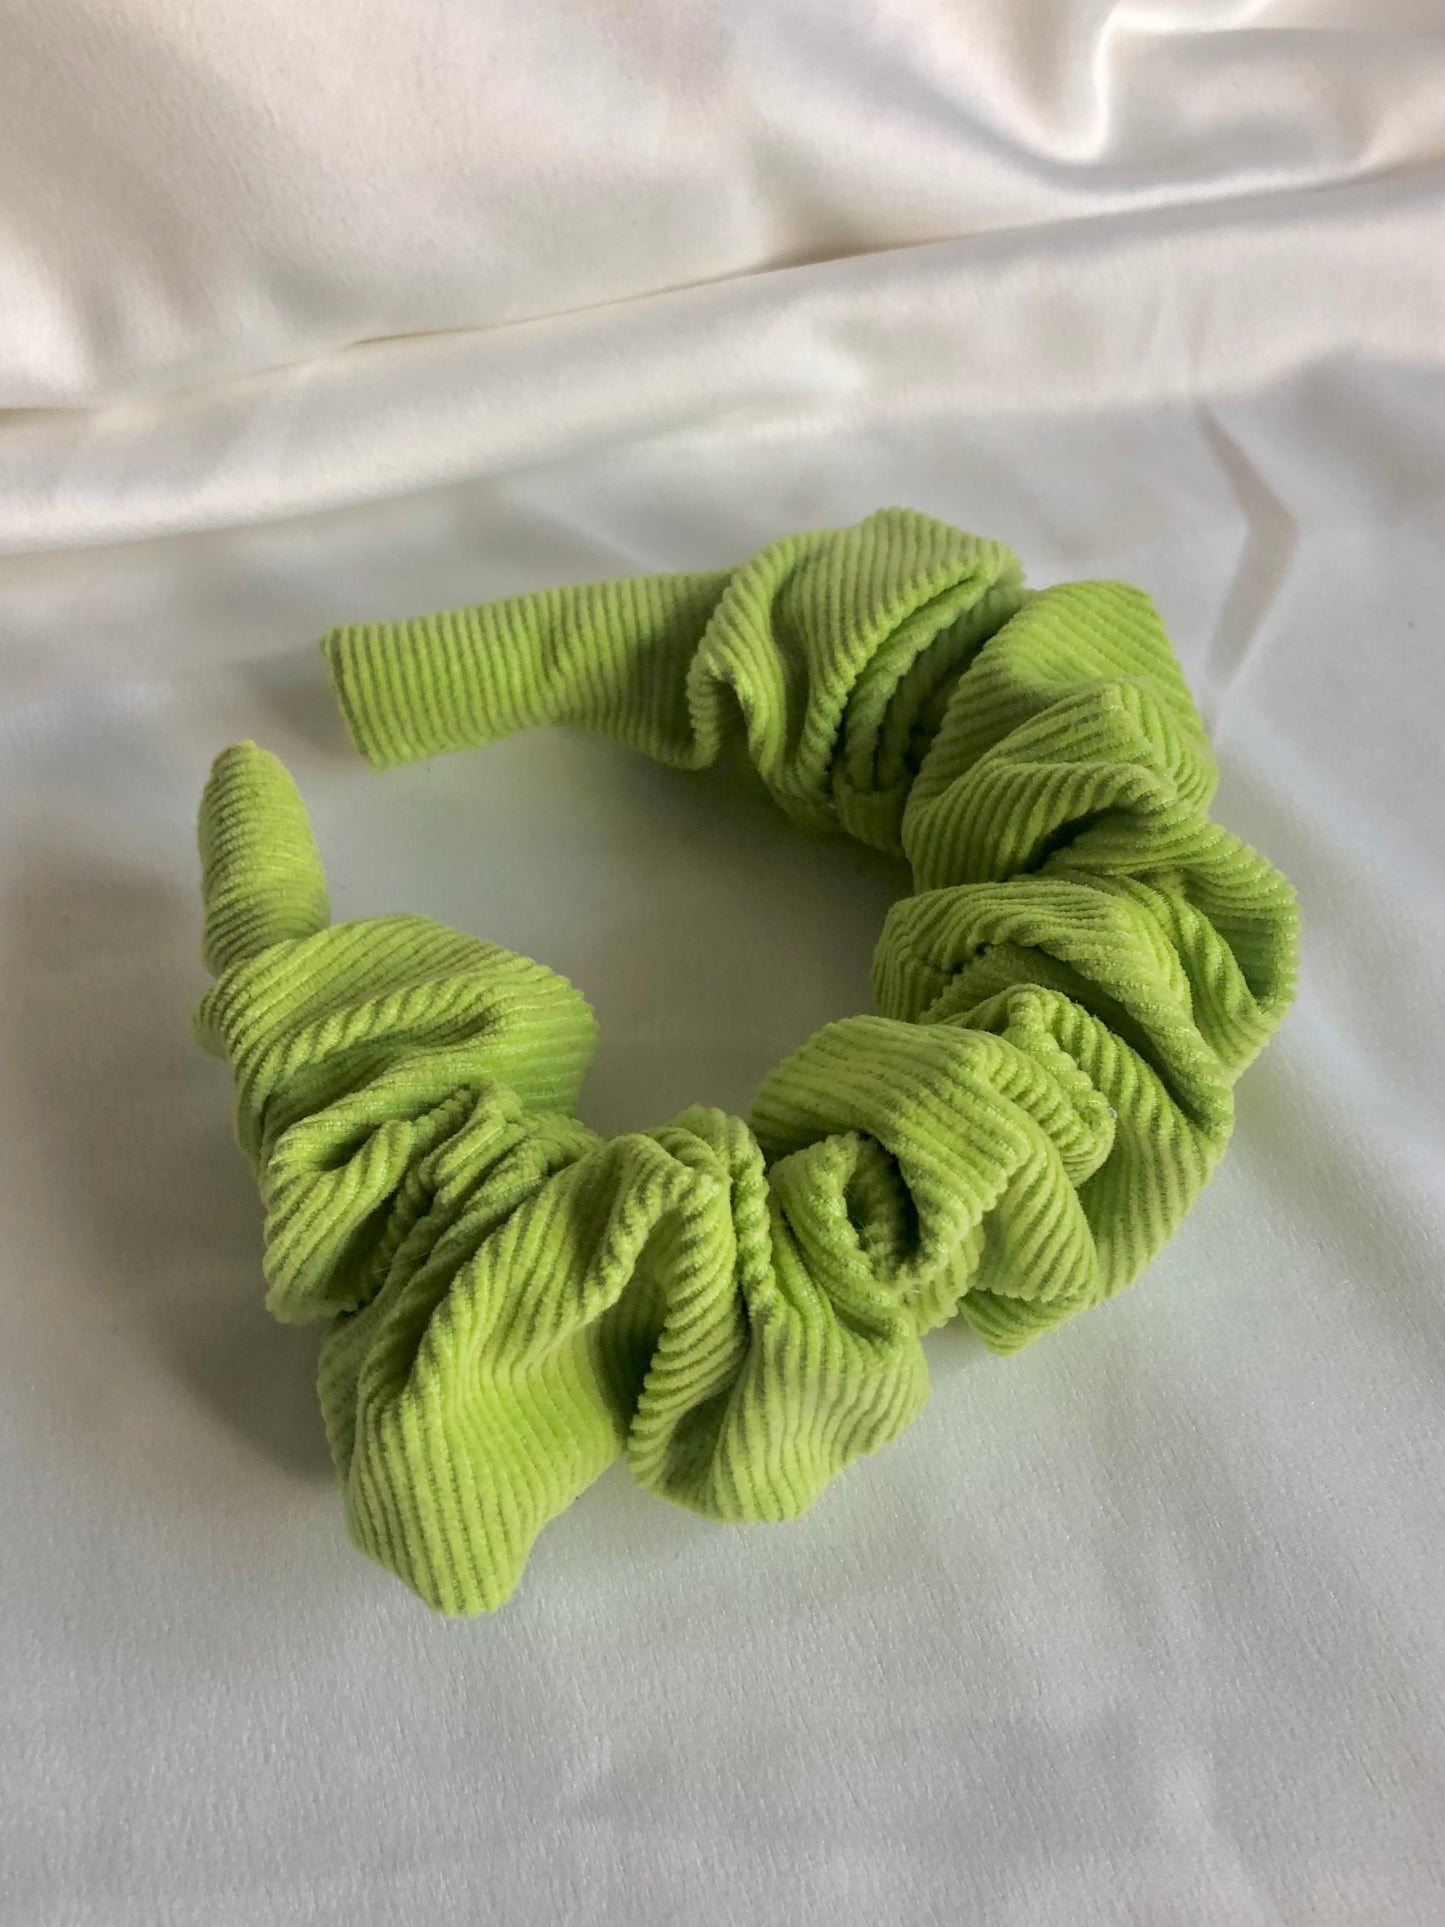 Pisco Lime Green Cord headband - choose style